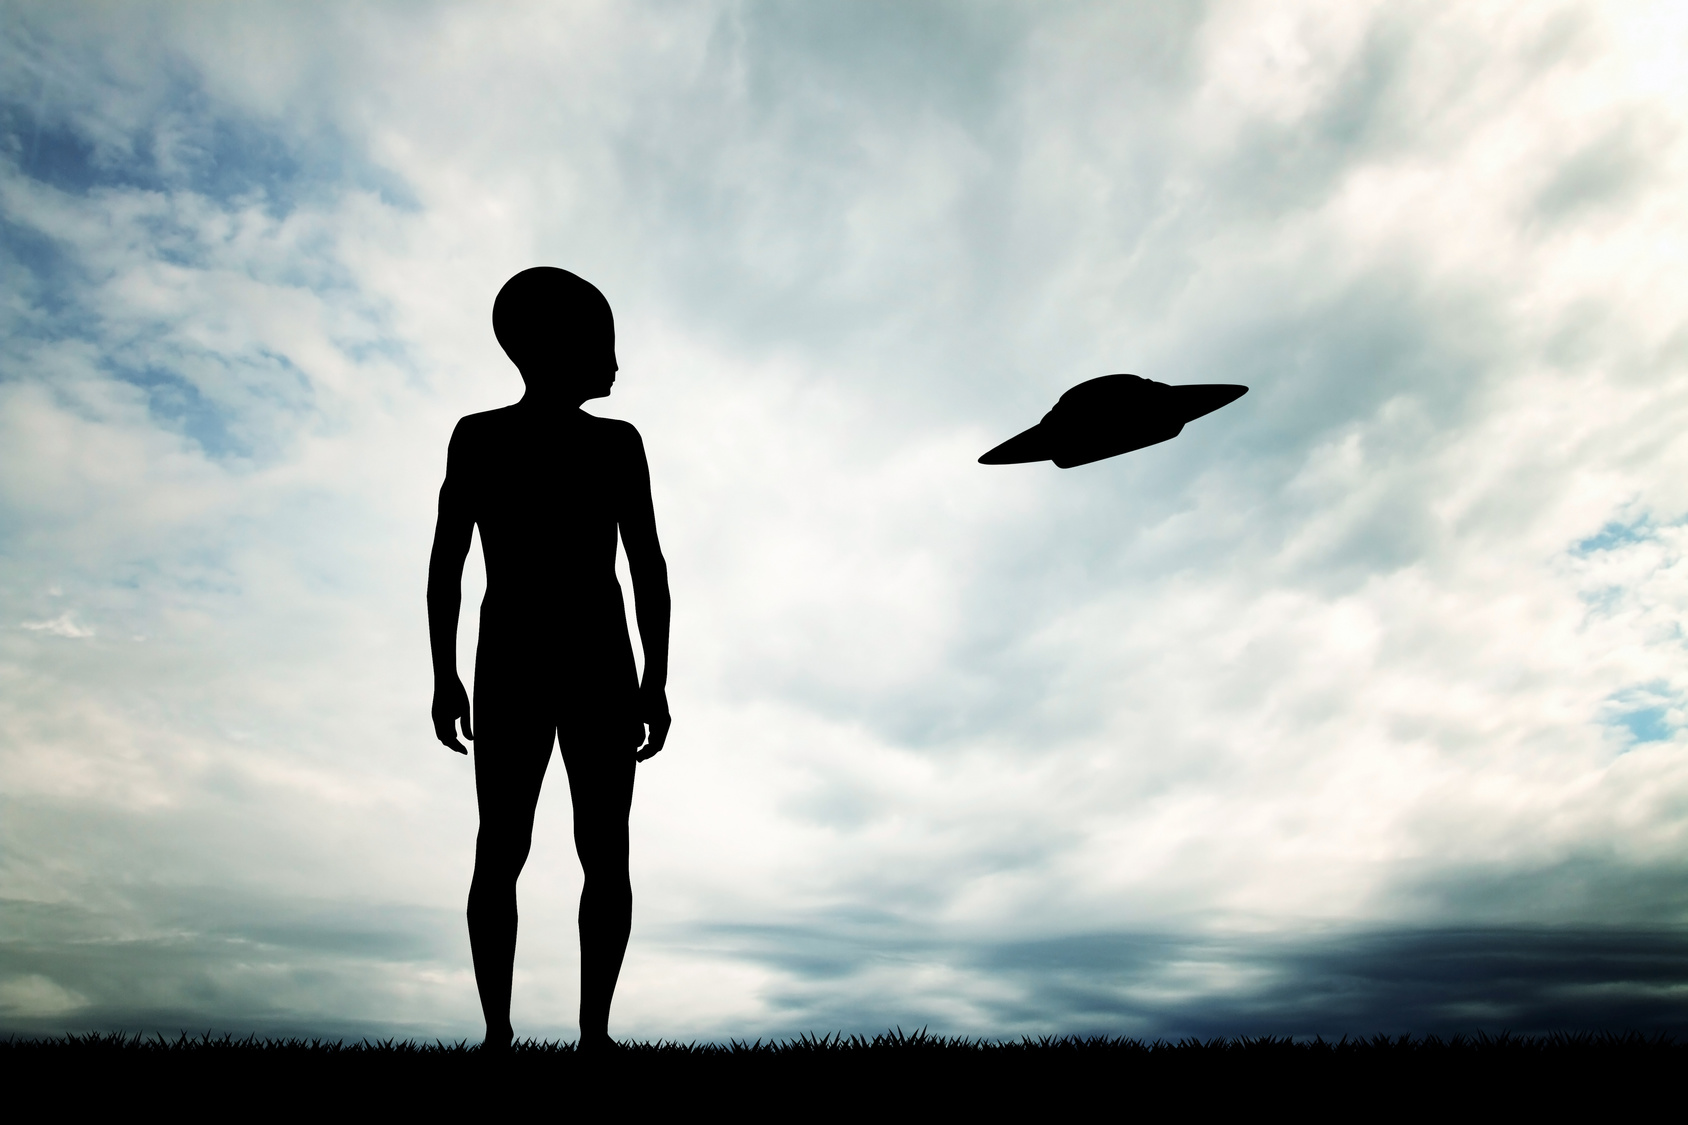 Alien and ufo silhouette